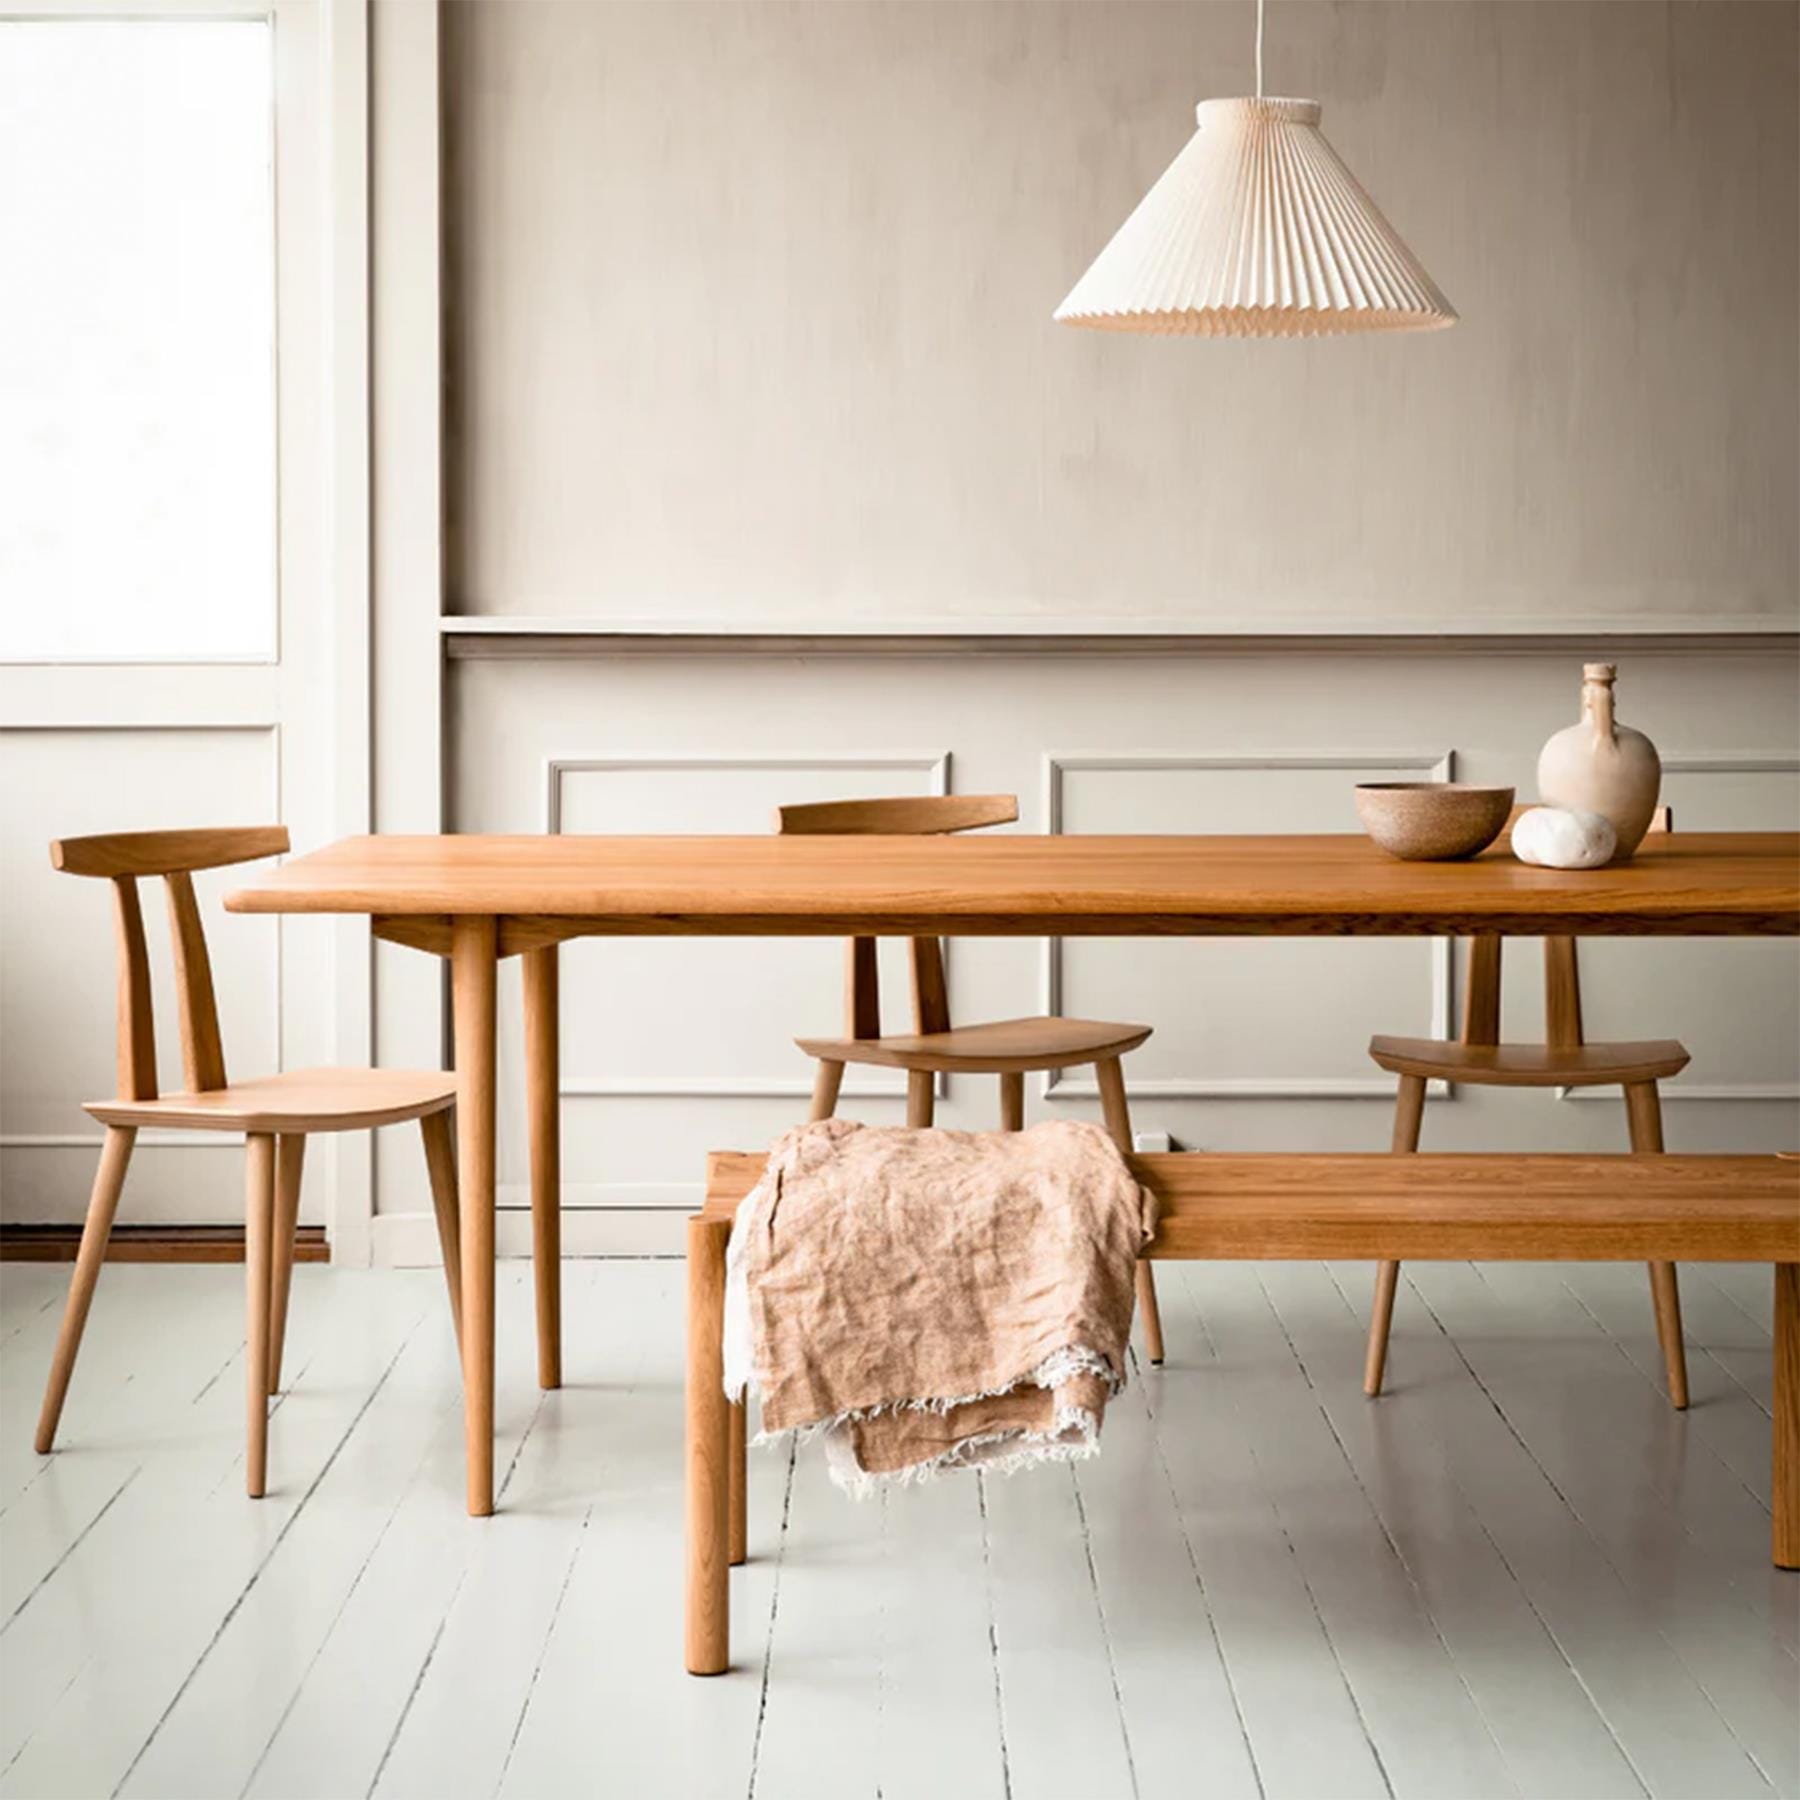 Make Nordic Holmen Rectangular Dining Table Large Natural Oak Length 280cm Width 80cm Without Extra Leaves Light Wood Designer Furniture From